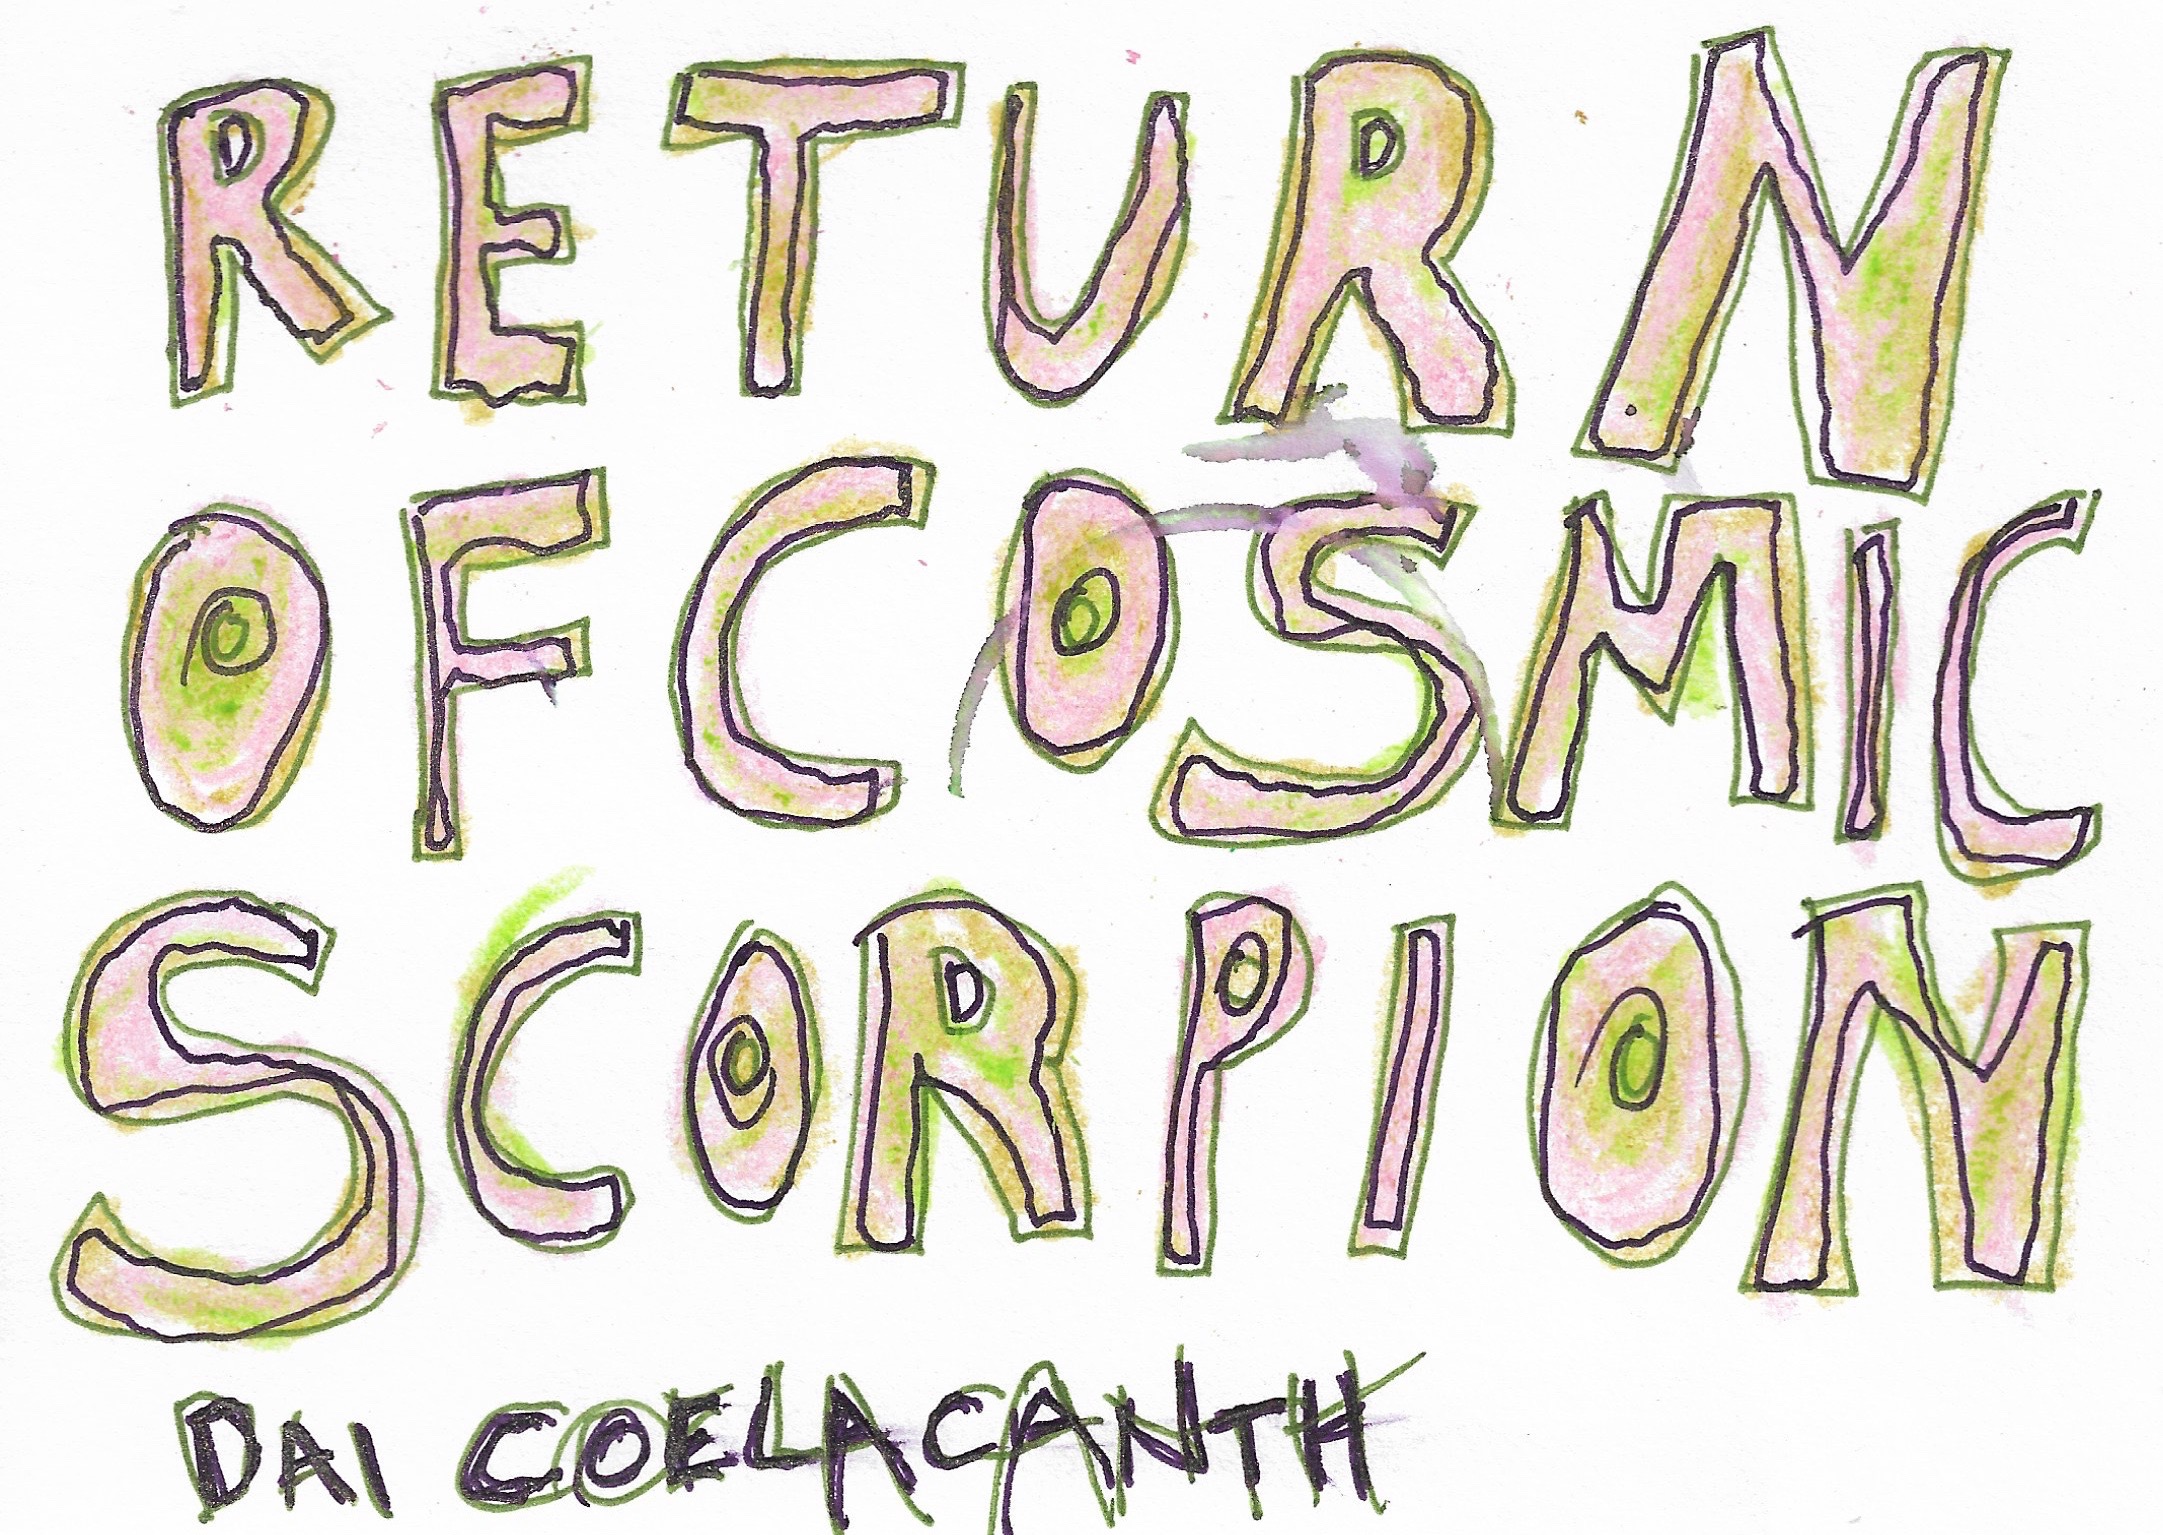 Dai Coelacanth – Return of the Cosmic Scorpion